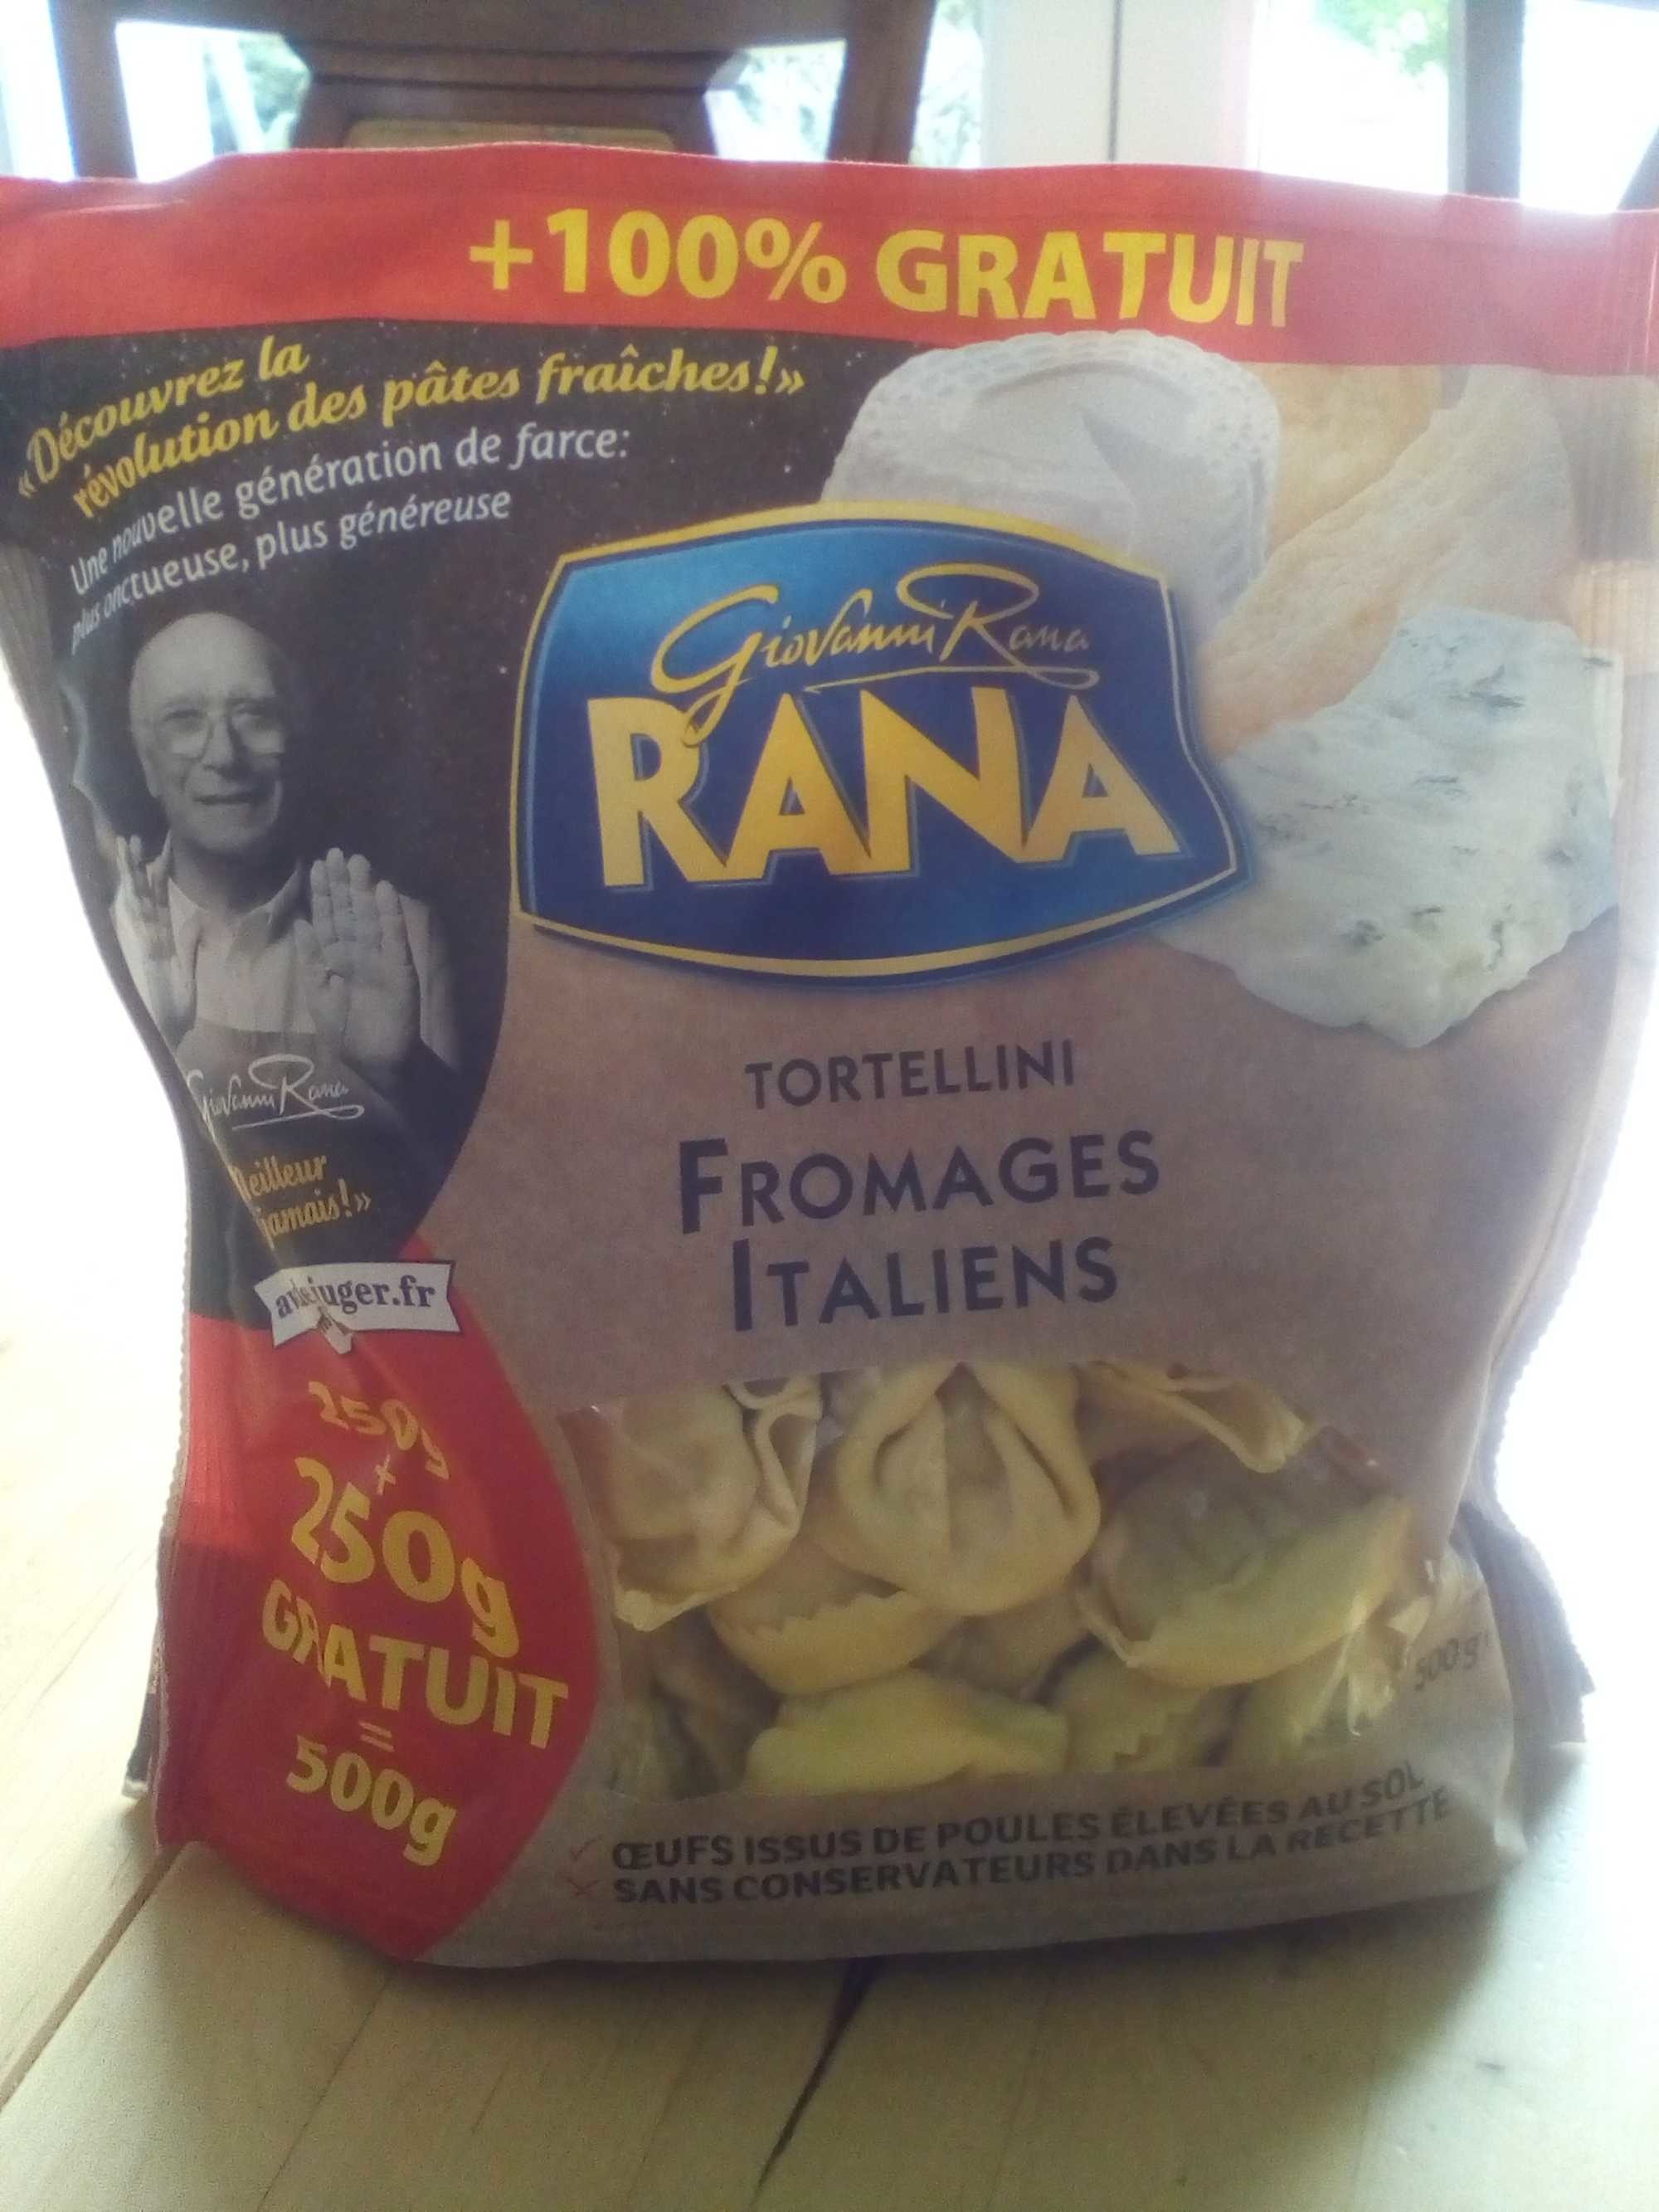 Tortellini fromages italiens - Produkt - fr